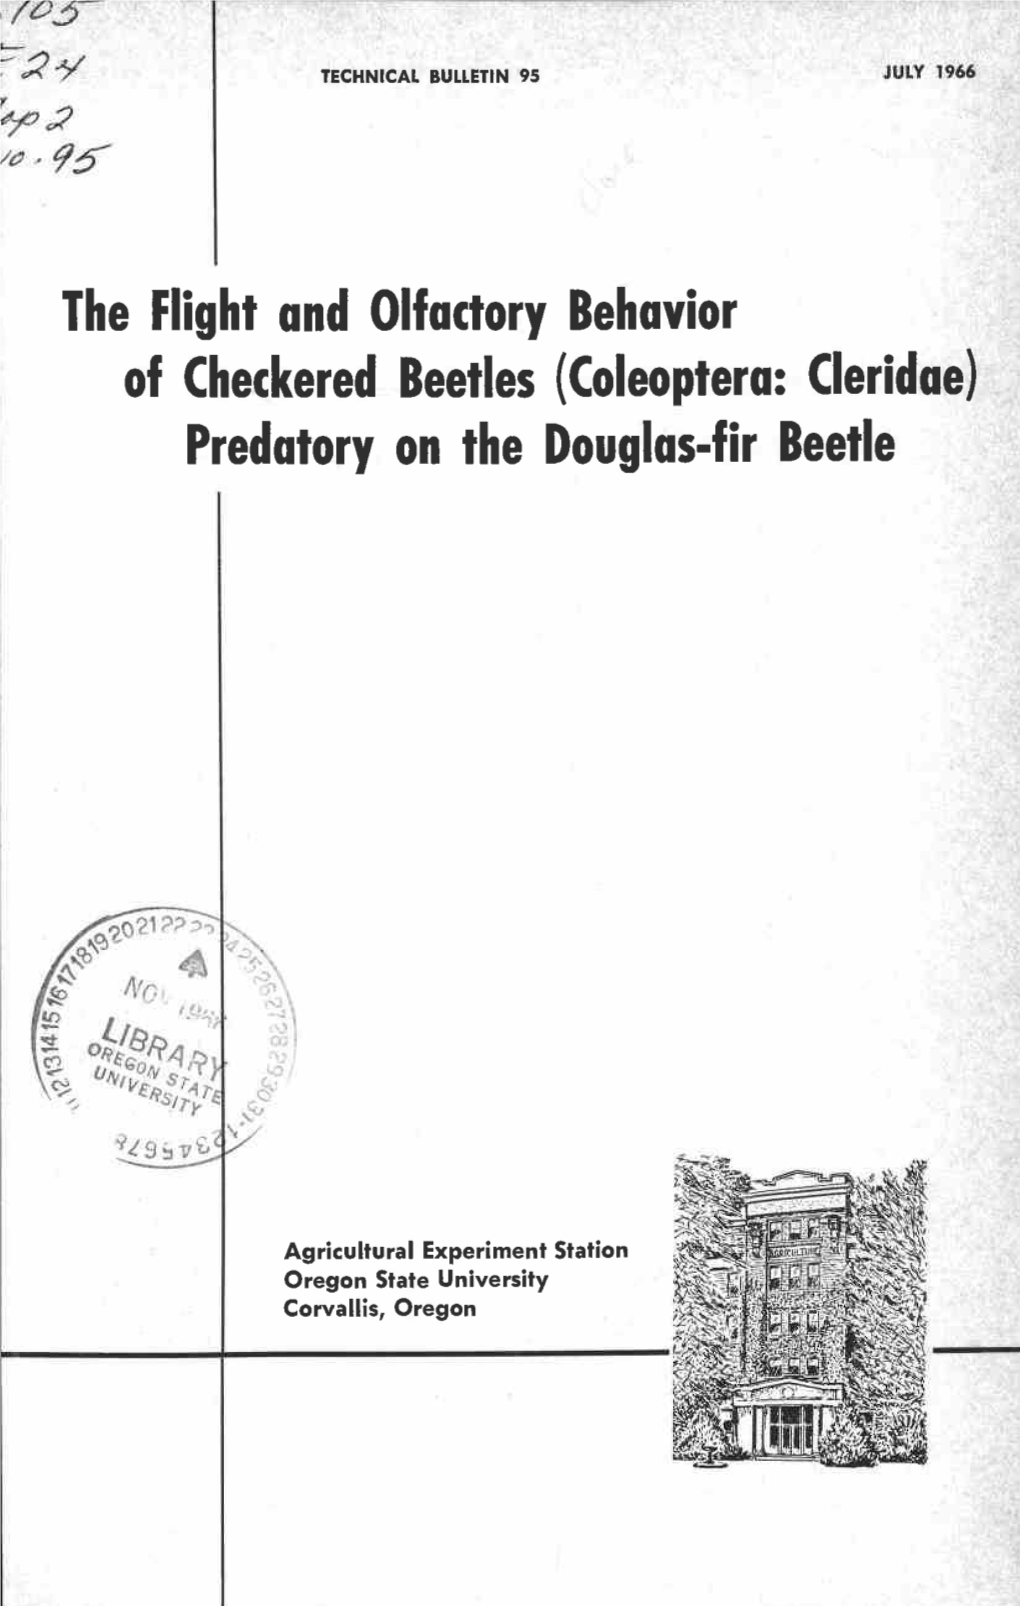 The Flight and Olfactory Behavior Predatory on the Douglas-Fir Beetle